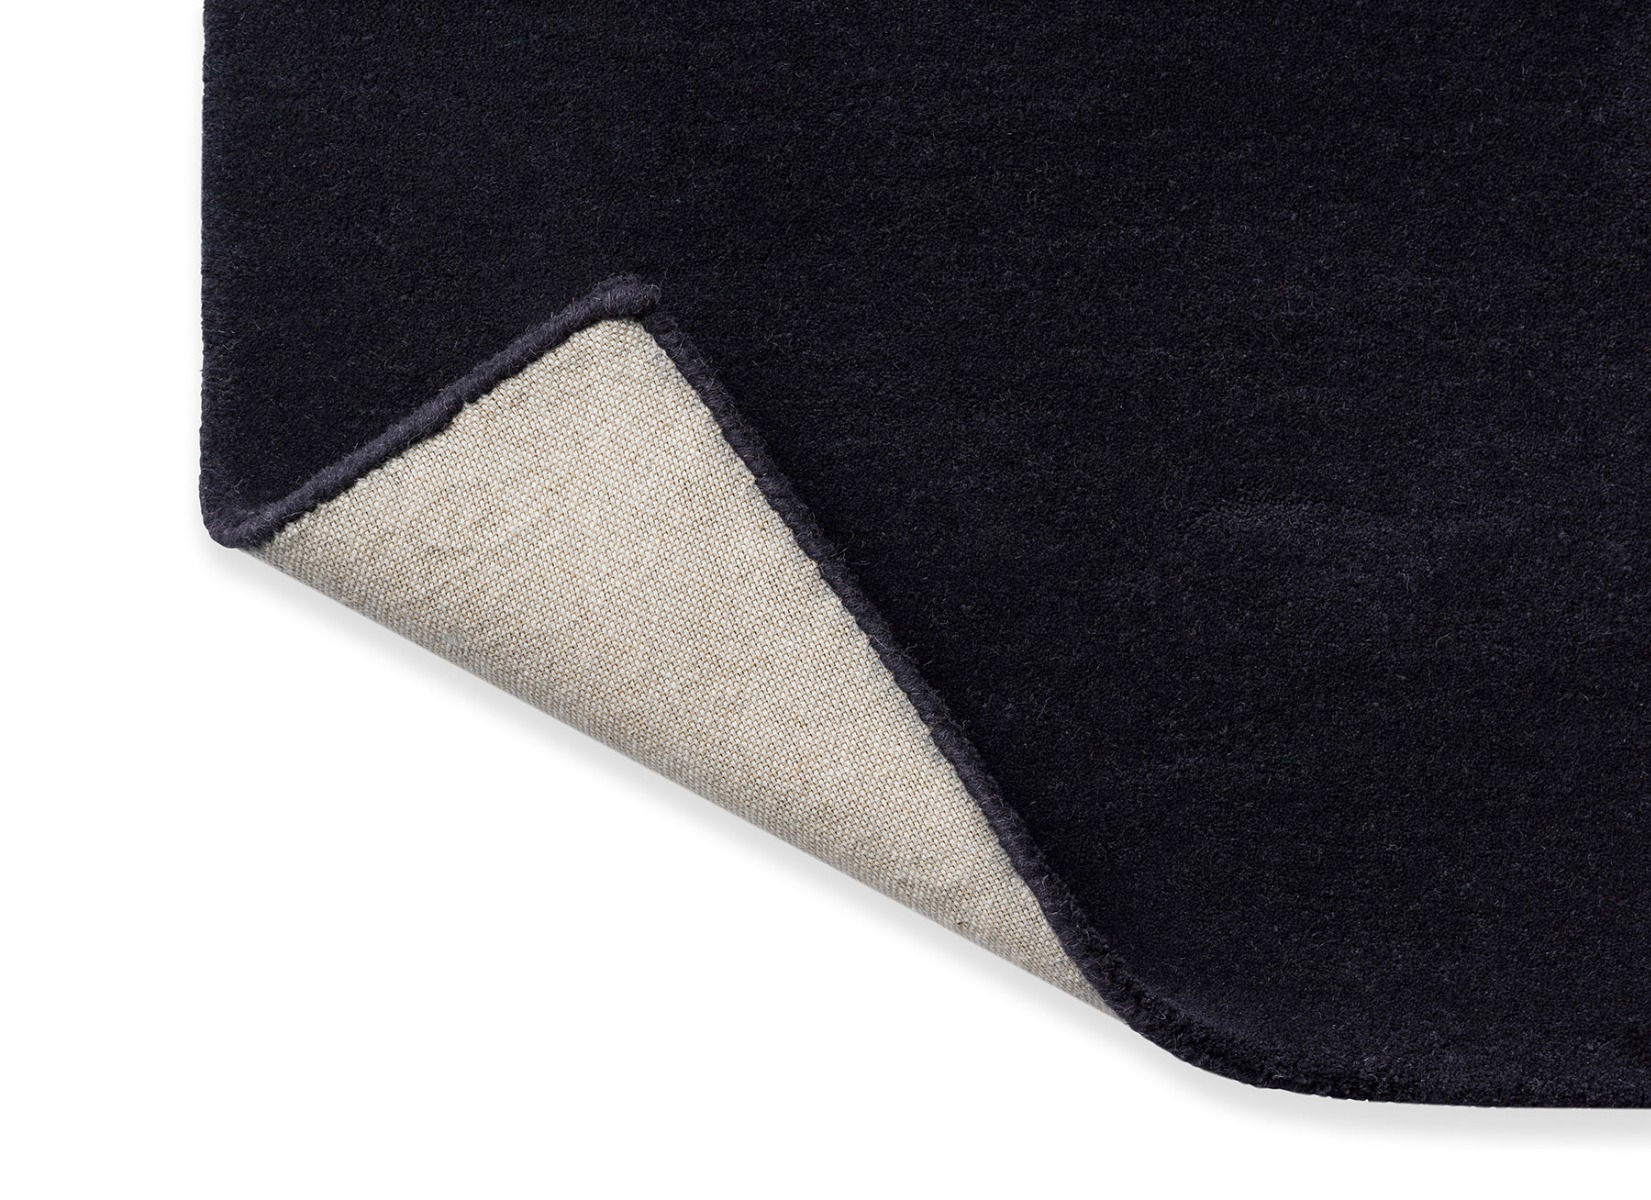 Decor Bruta Off-Black Handwoven Rug ☞ Size: 4' 7" x 6' 7" (140 x 200 cm)